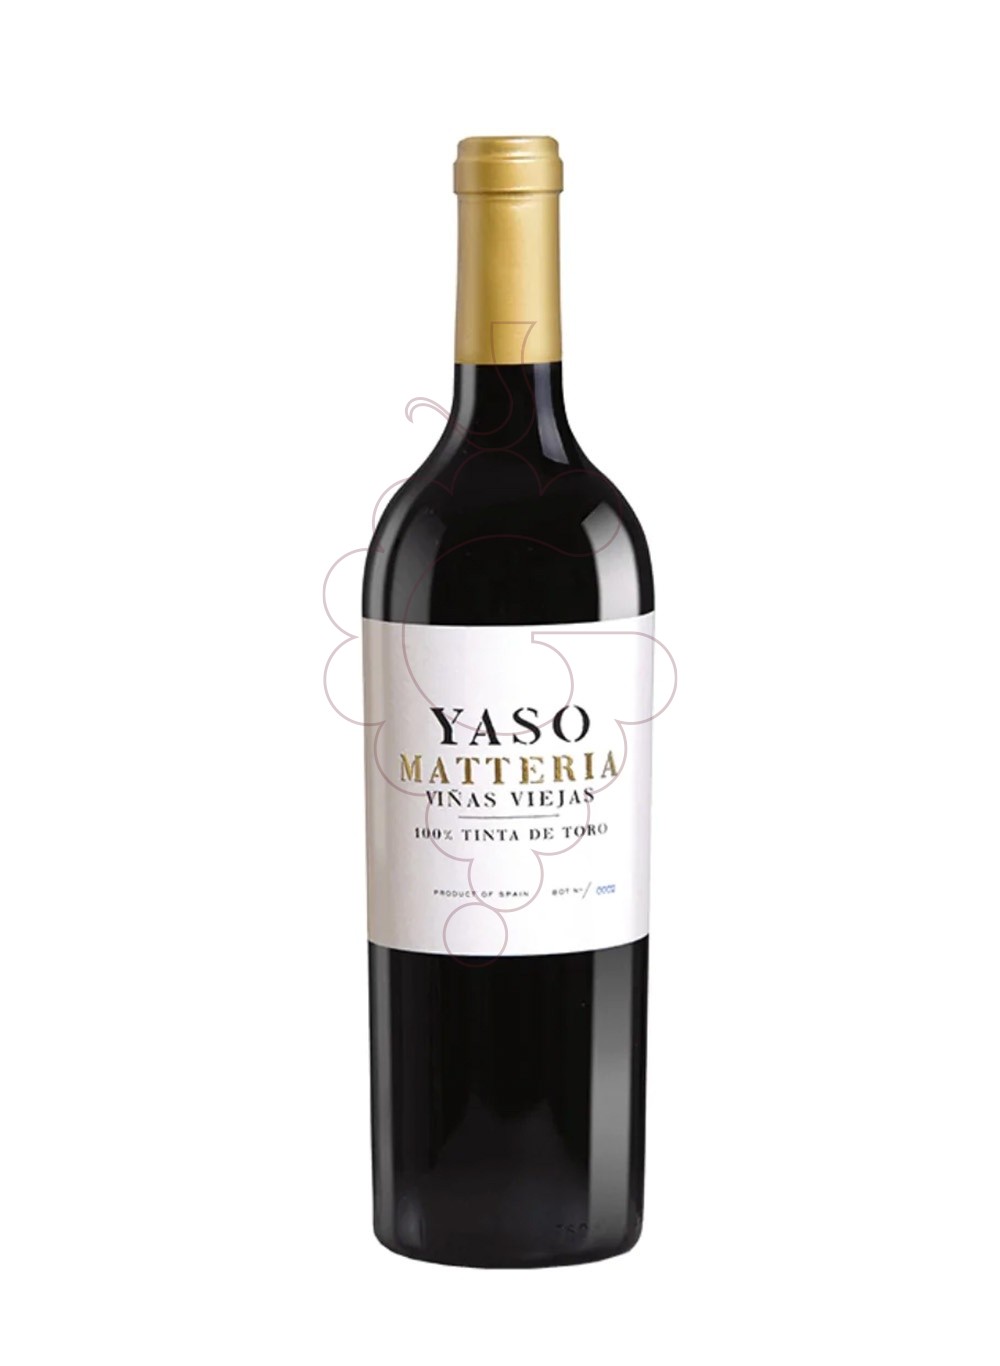 Photo Yaso matteria vi?as viejas 15 red wine